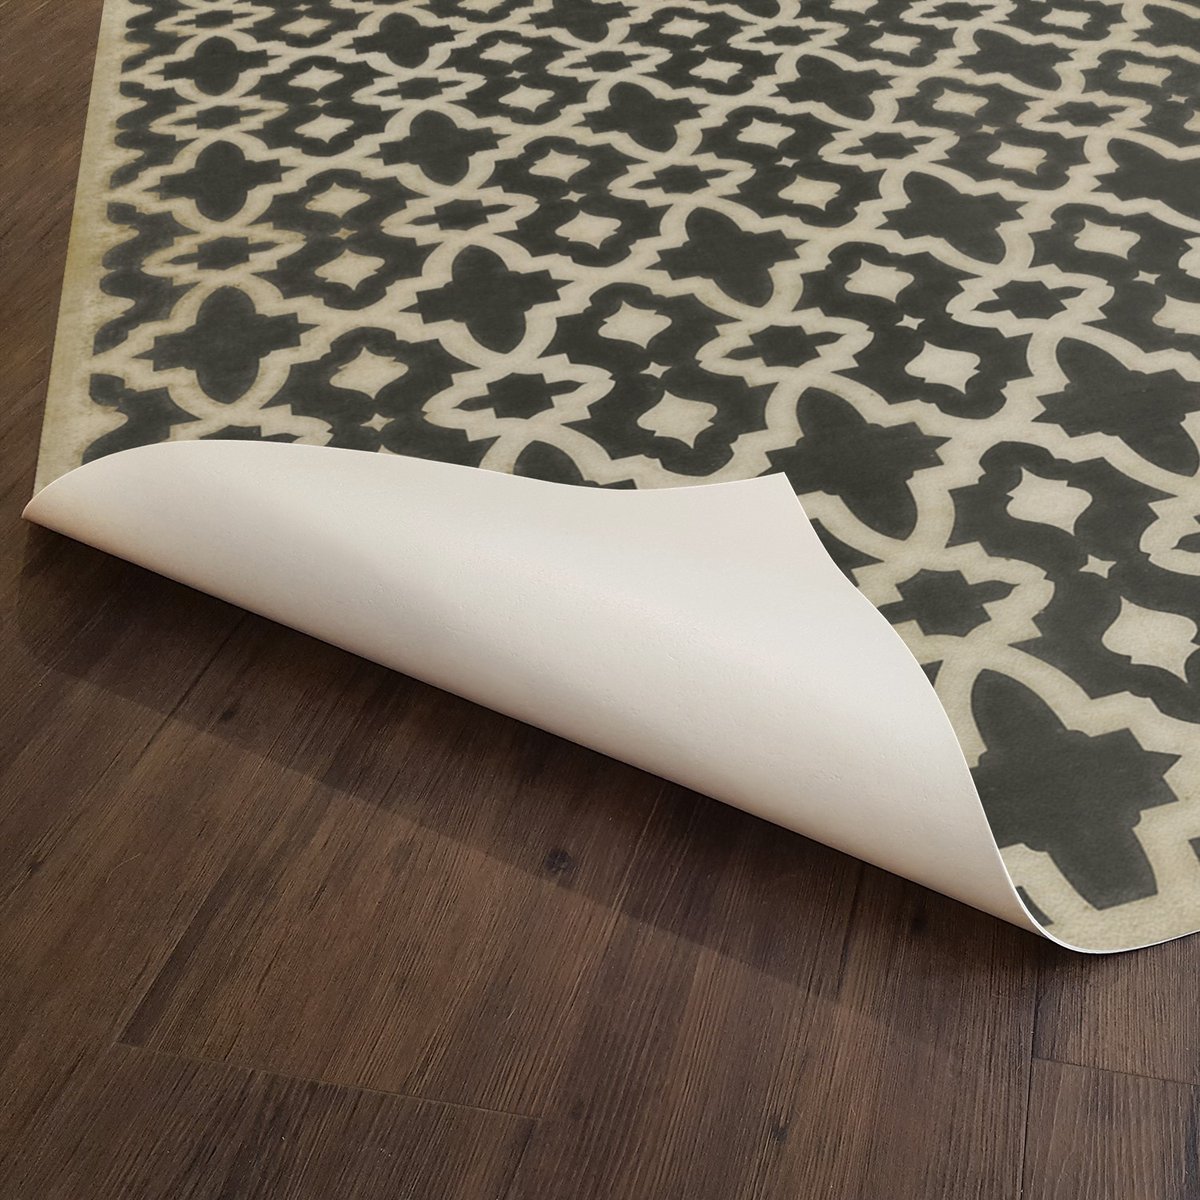 Vinyl rug with cow print